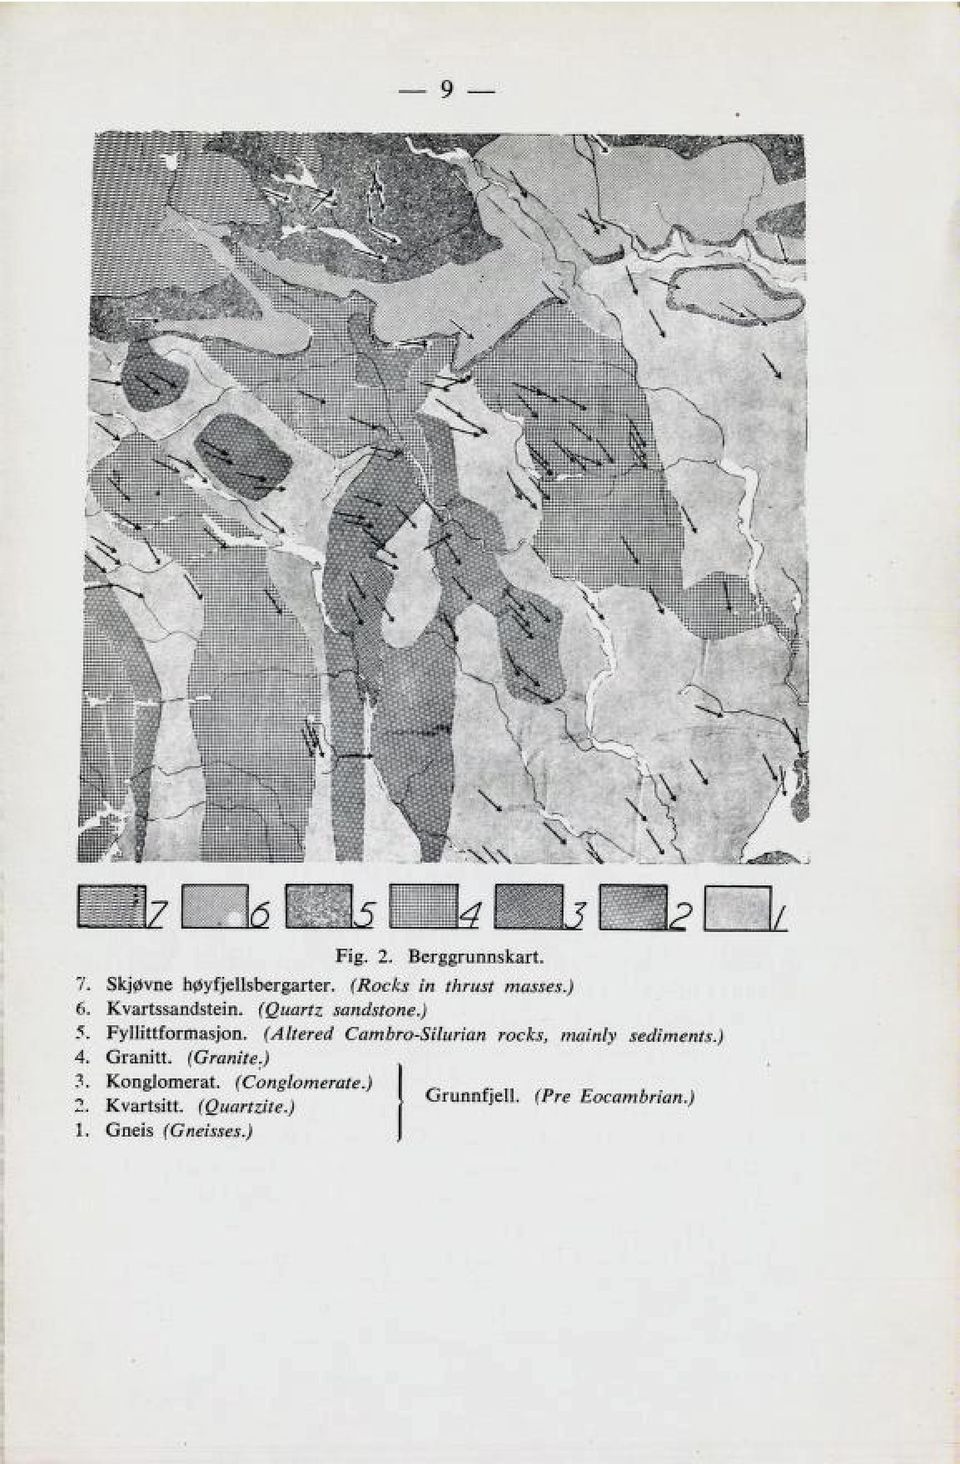 (Altered Cambro-Silurian rocks, mainly sediments.) 4. Granitt. (Granite.) 3.